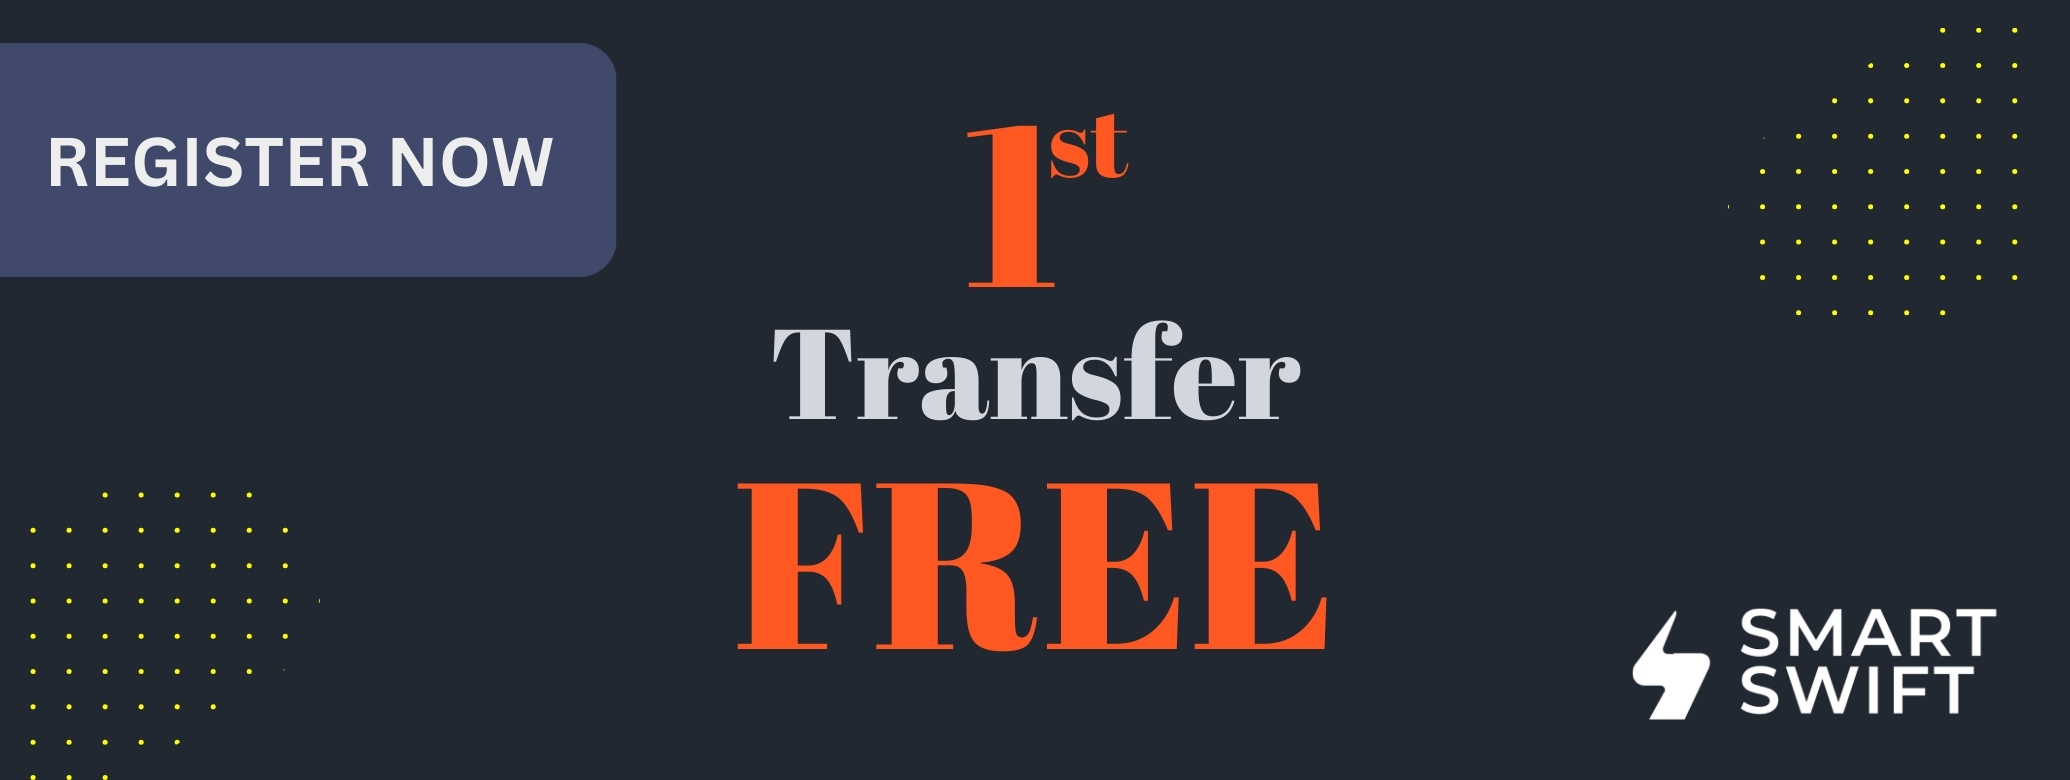 Free Transfer